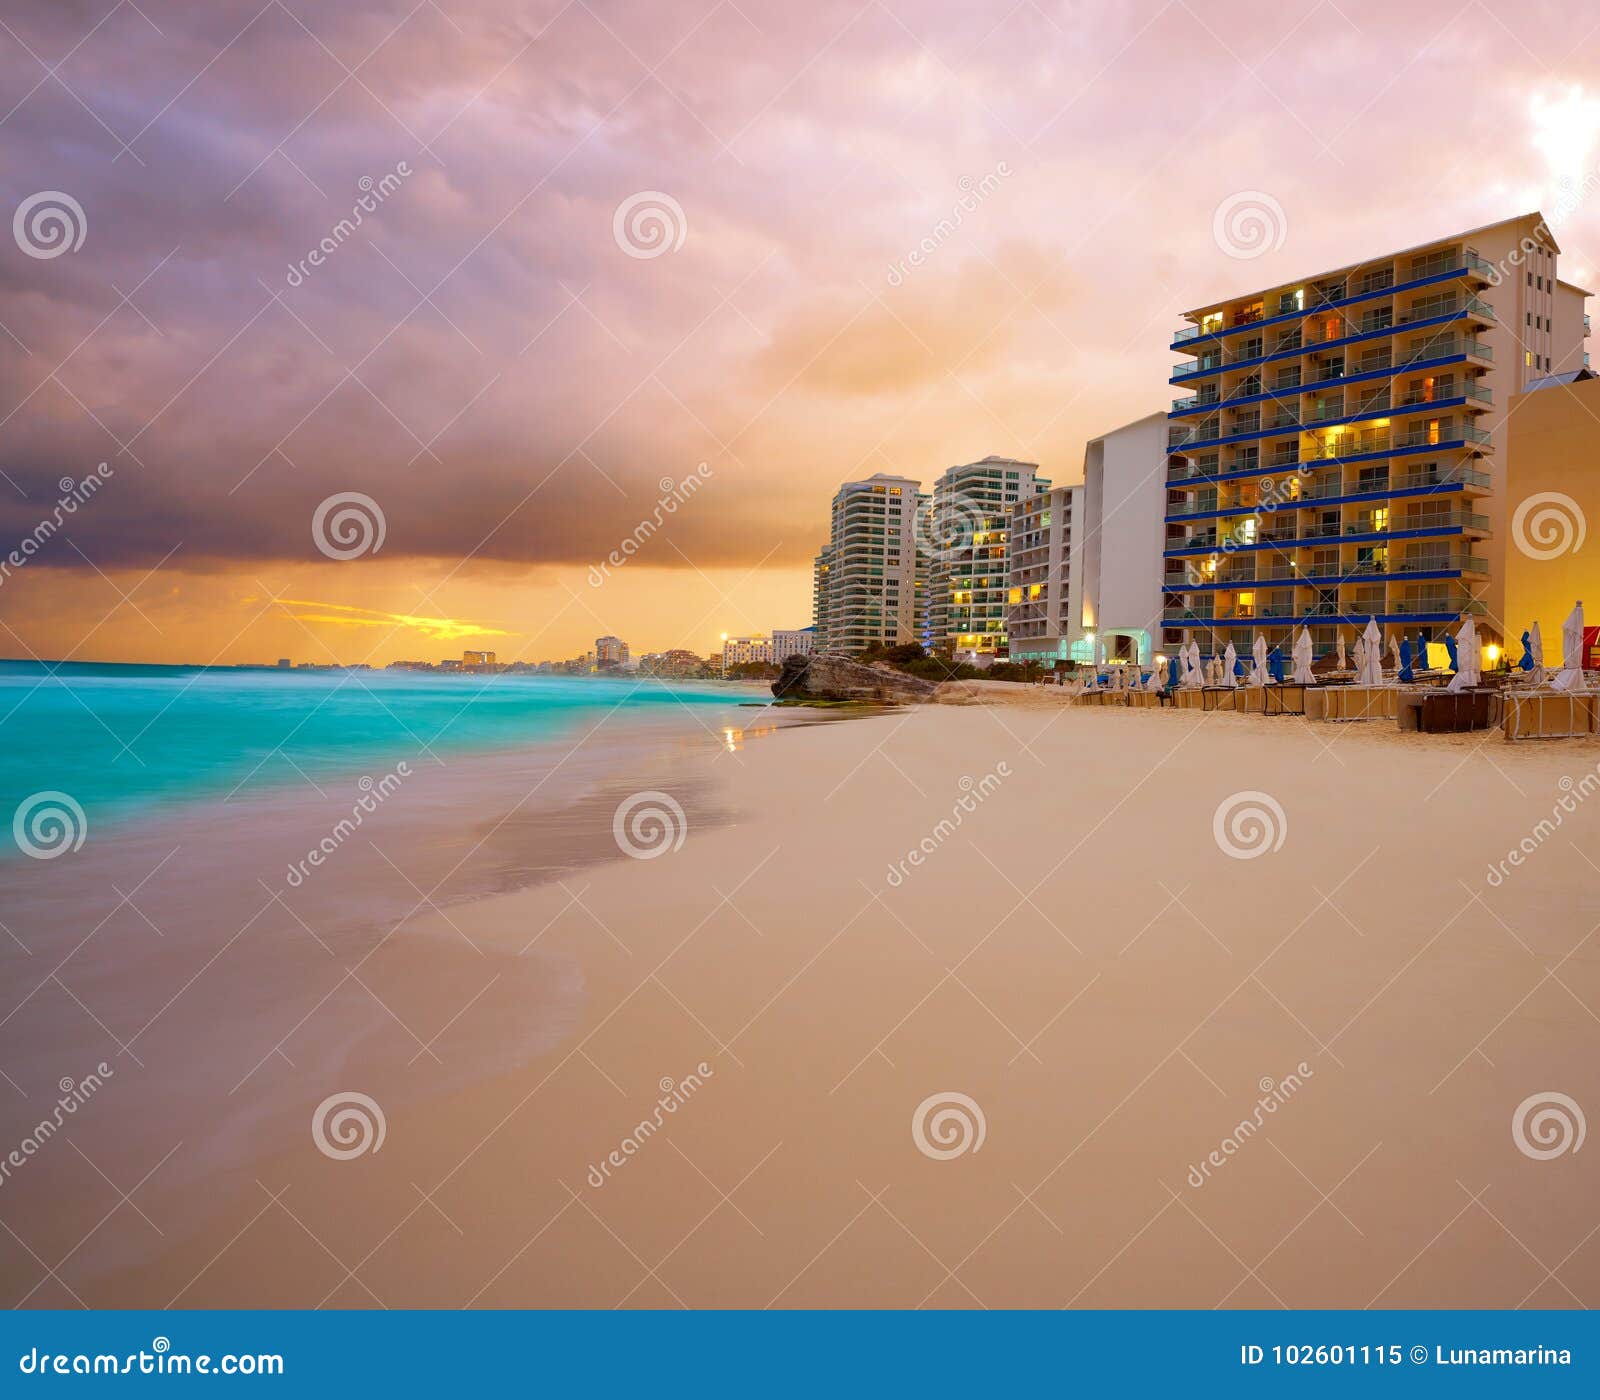 cancun forum beach sunset in mexico